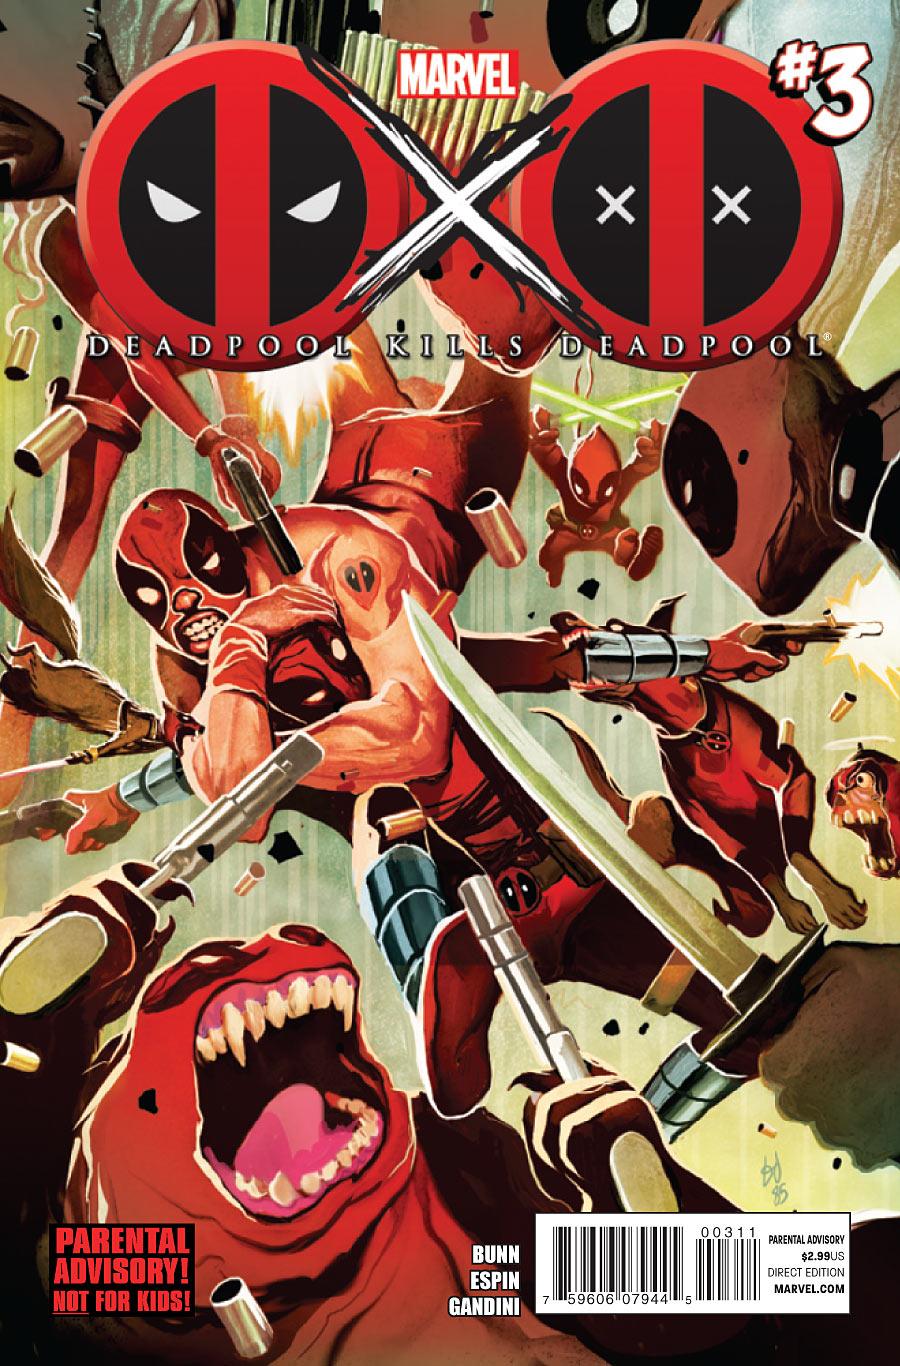 Deadpool Kills Deadpool Vol. 1 #3